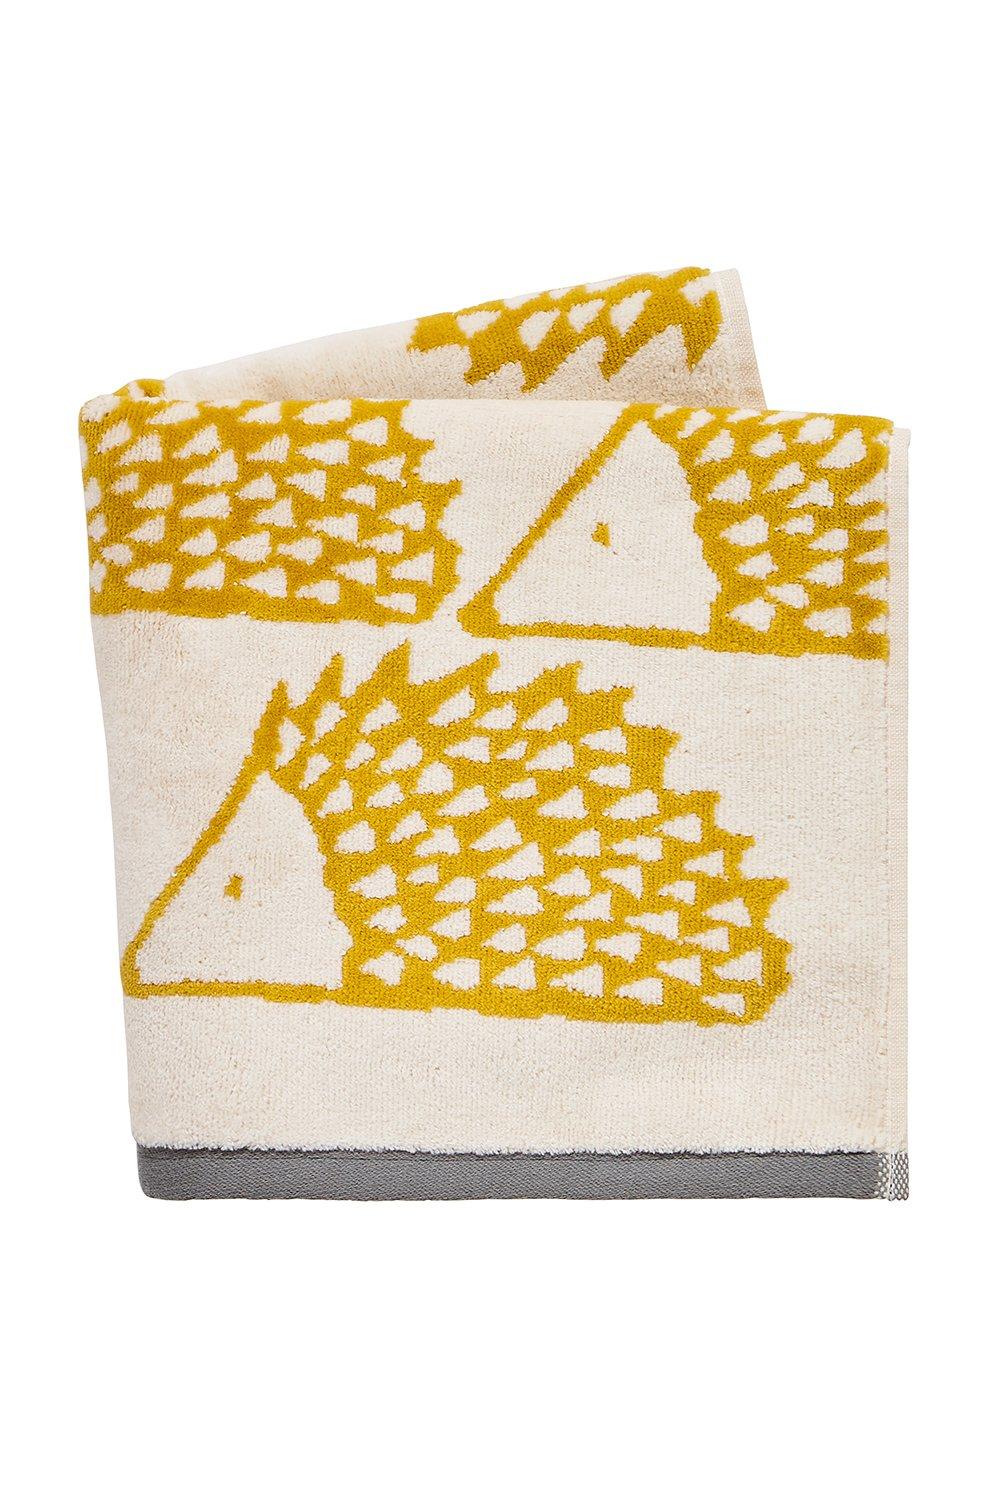 Scion - Spike Towel - Mustard - Guest Towel